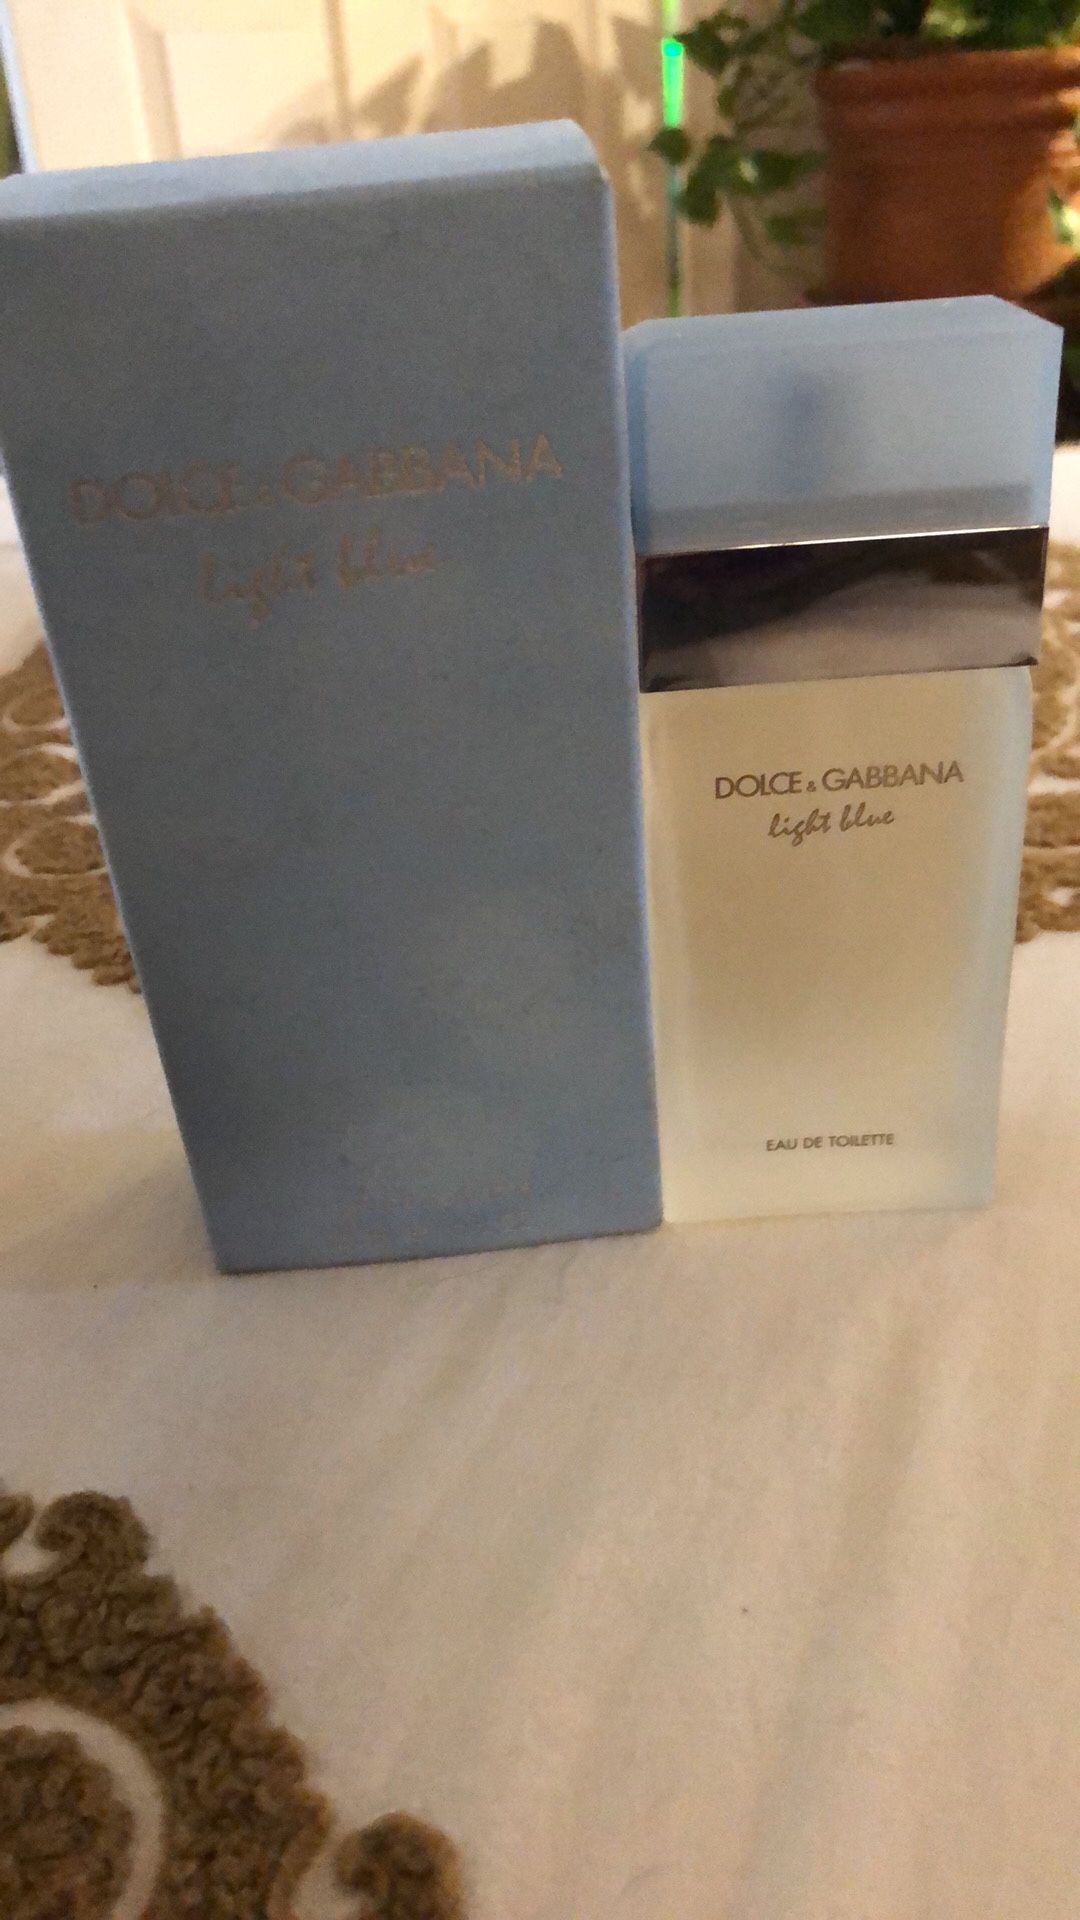 Dolce & Gabbana perfume “Light Blue”